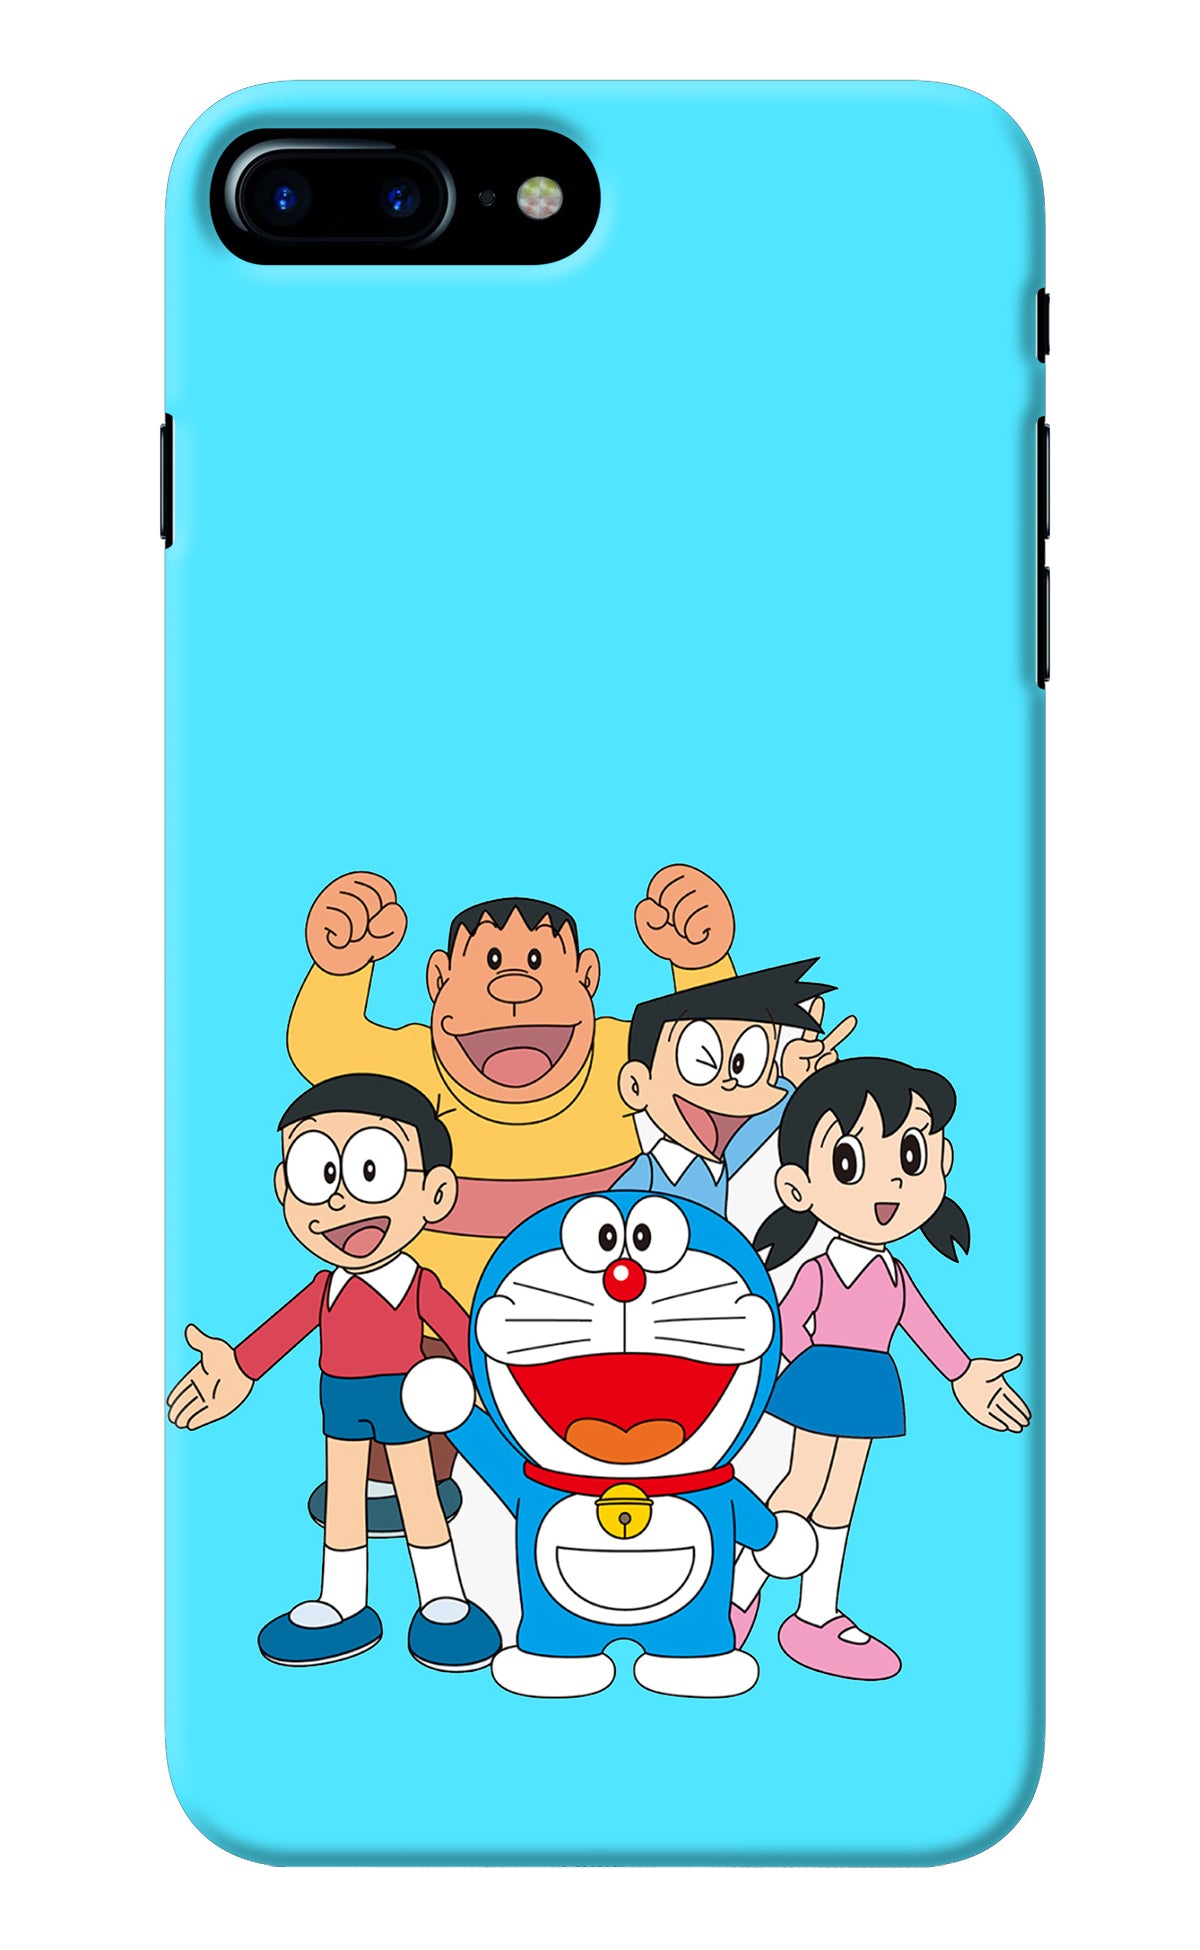 Doraemon Gang iPhone 8 Plus Back Cover